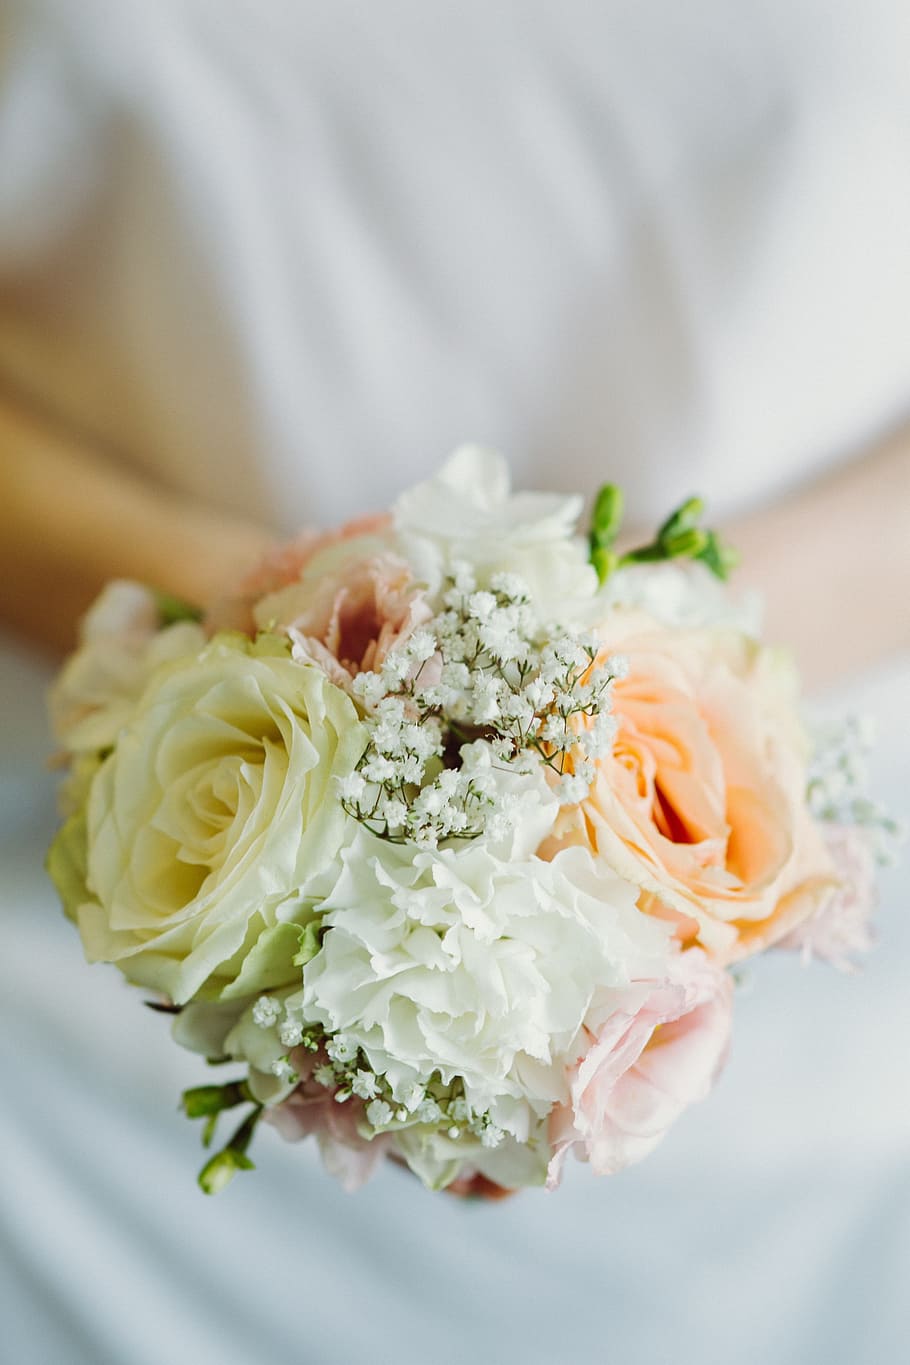 wedding flowers, flowers, wedding, bouquet, bouqet, flower, plant, freshness, flowering plant, close-up